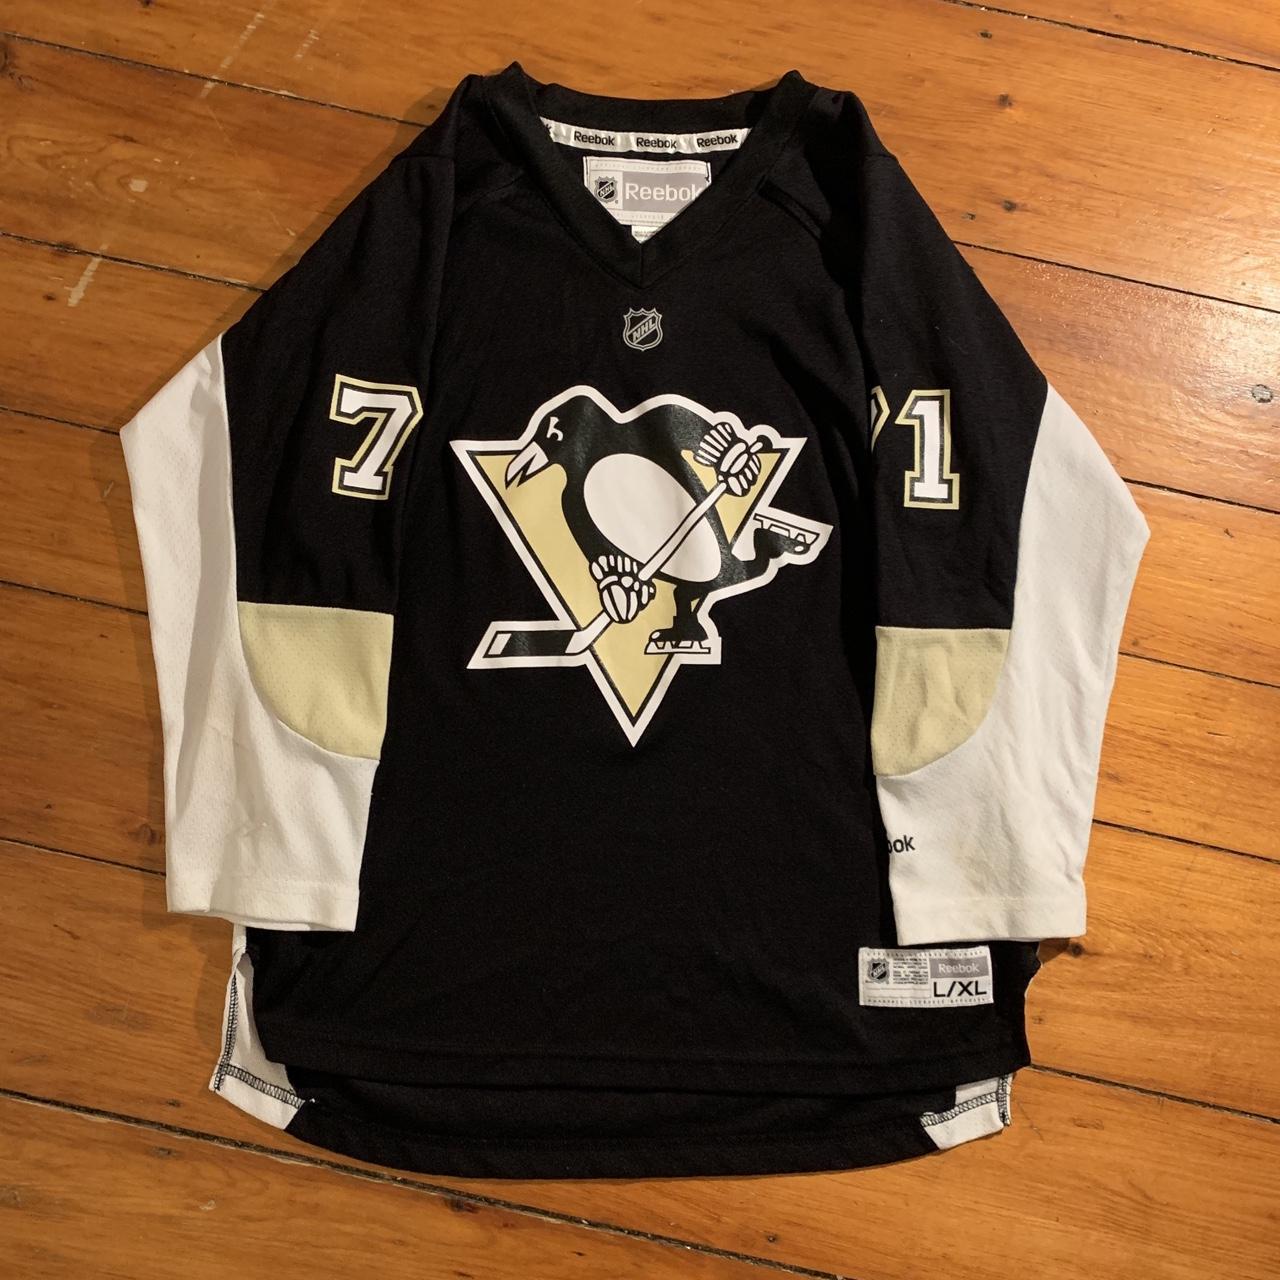 Reebok NHL Pittsburgh Penguins Evgeni Malkin #71 White Hockey